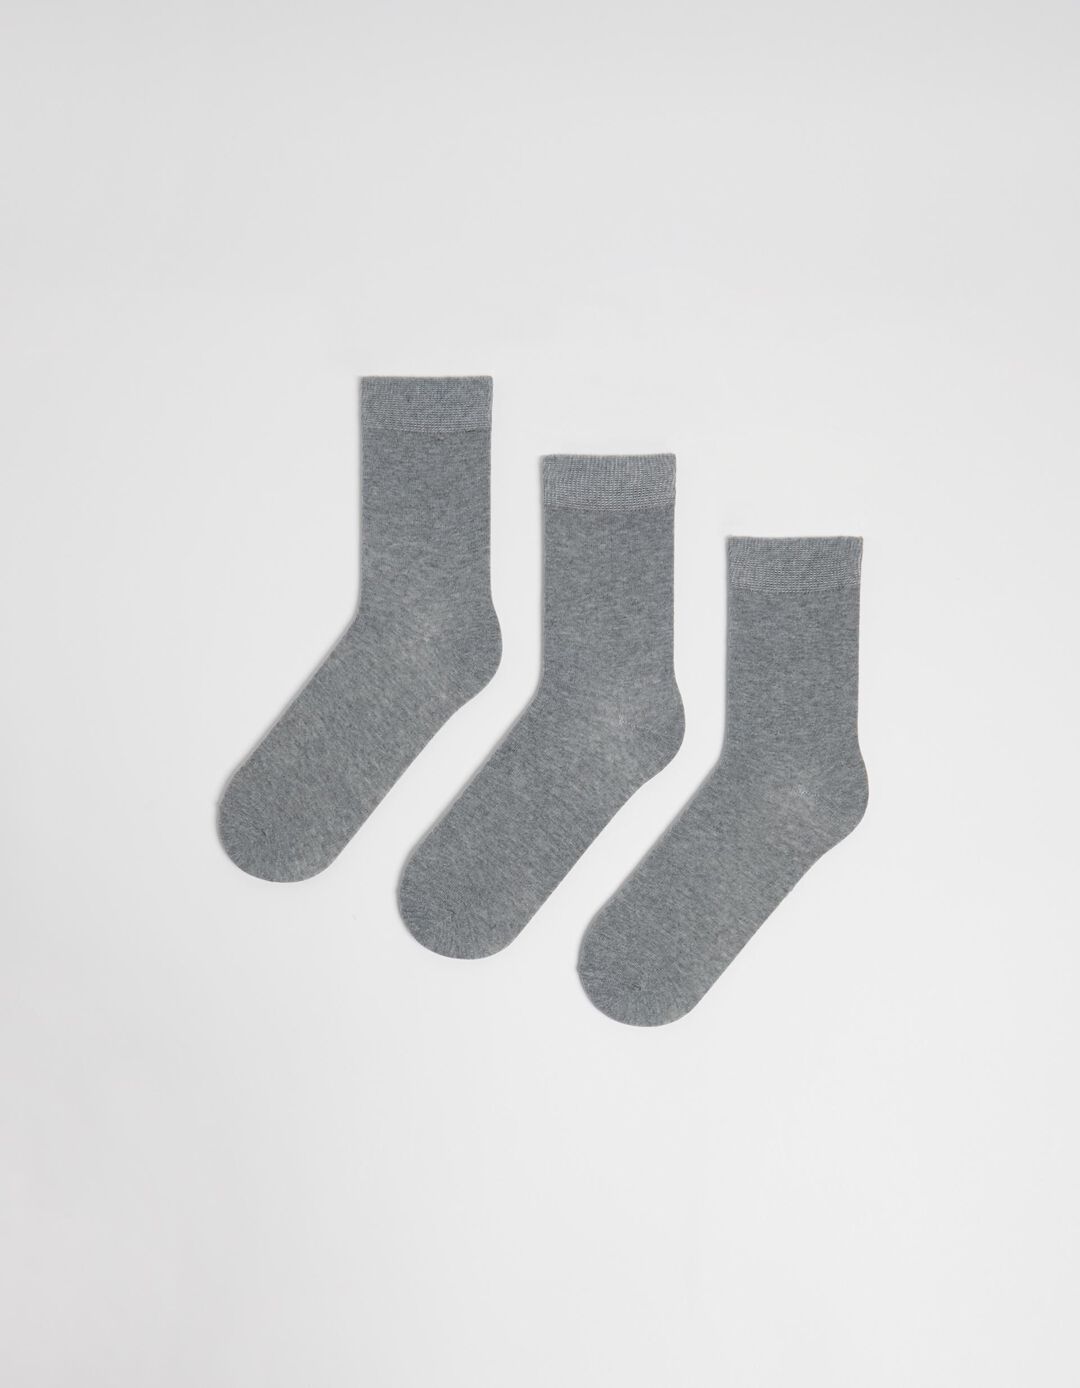 Pack 3 Pairs of Socks, Men, Gray